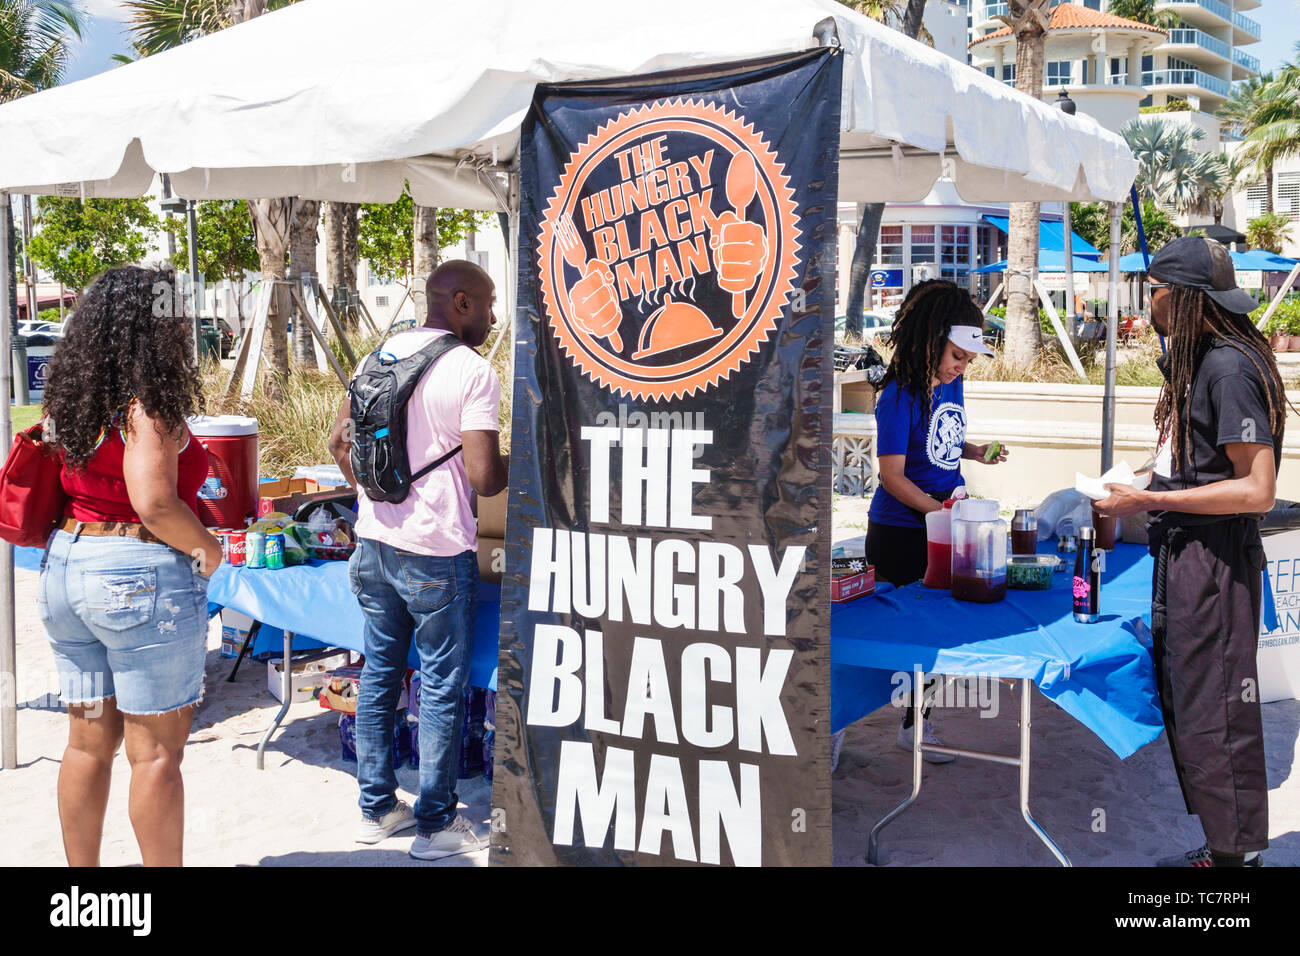 Miami Beach Florida,North Beach,Soul Vegan Festival,food,The Hungry Black Man,vendor's stall booth,Black man men male,woman female women,FL190331091 Stock Photo